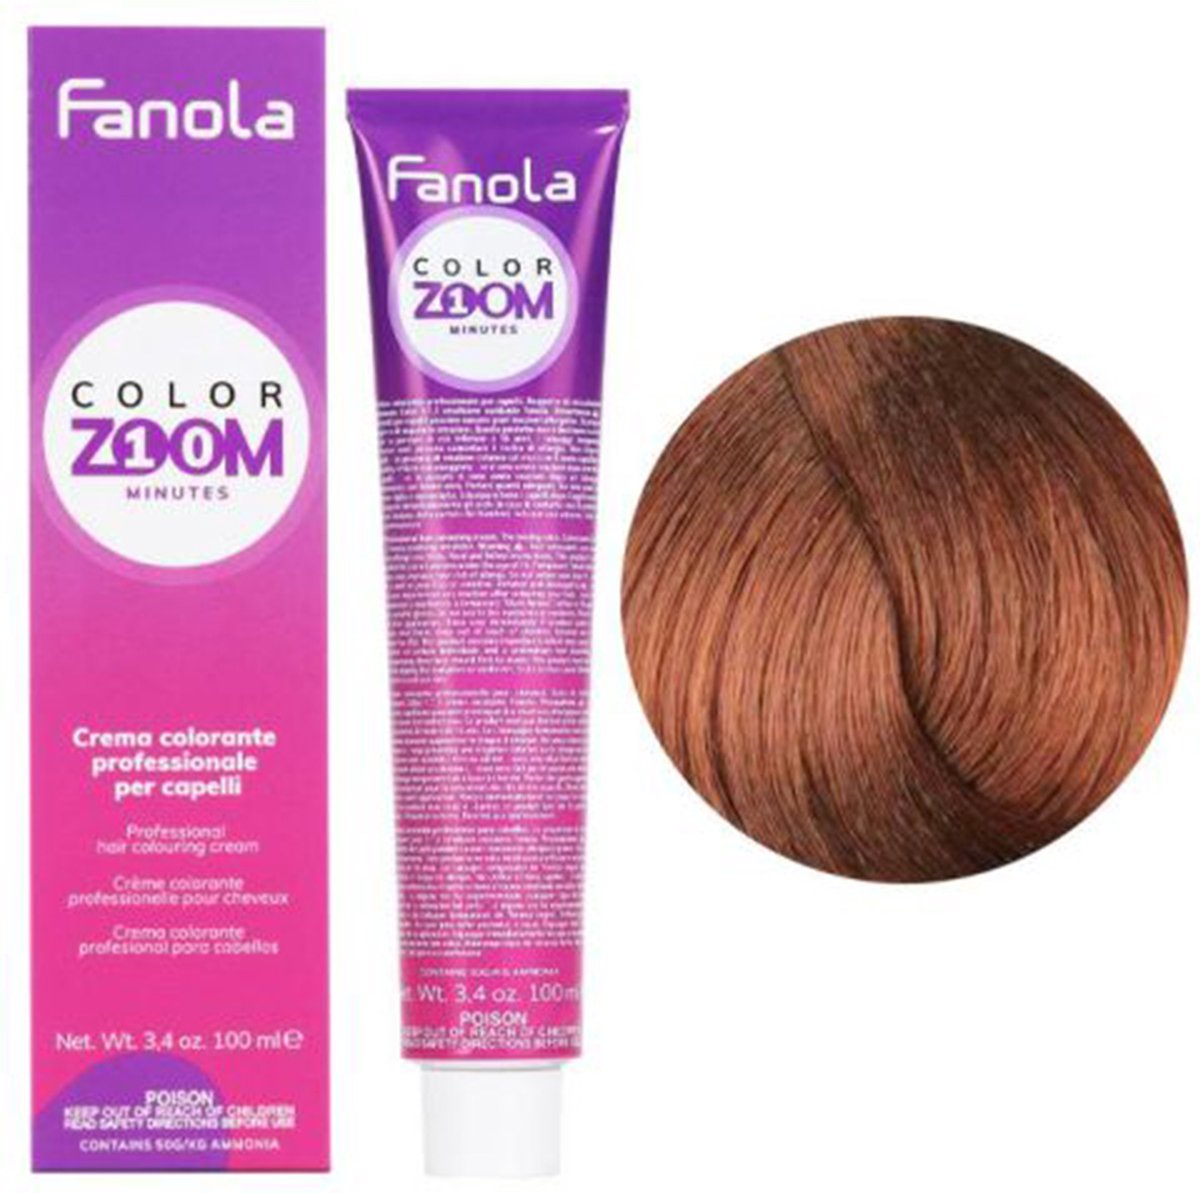 Fanola - Color Zoom - 100 ml - 7.4